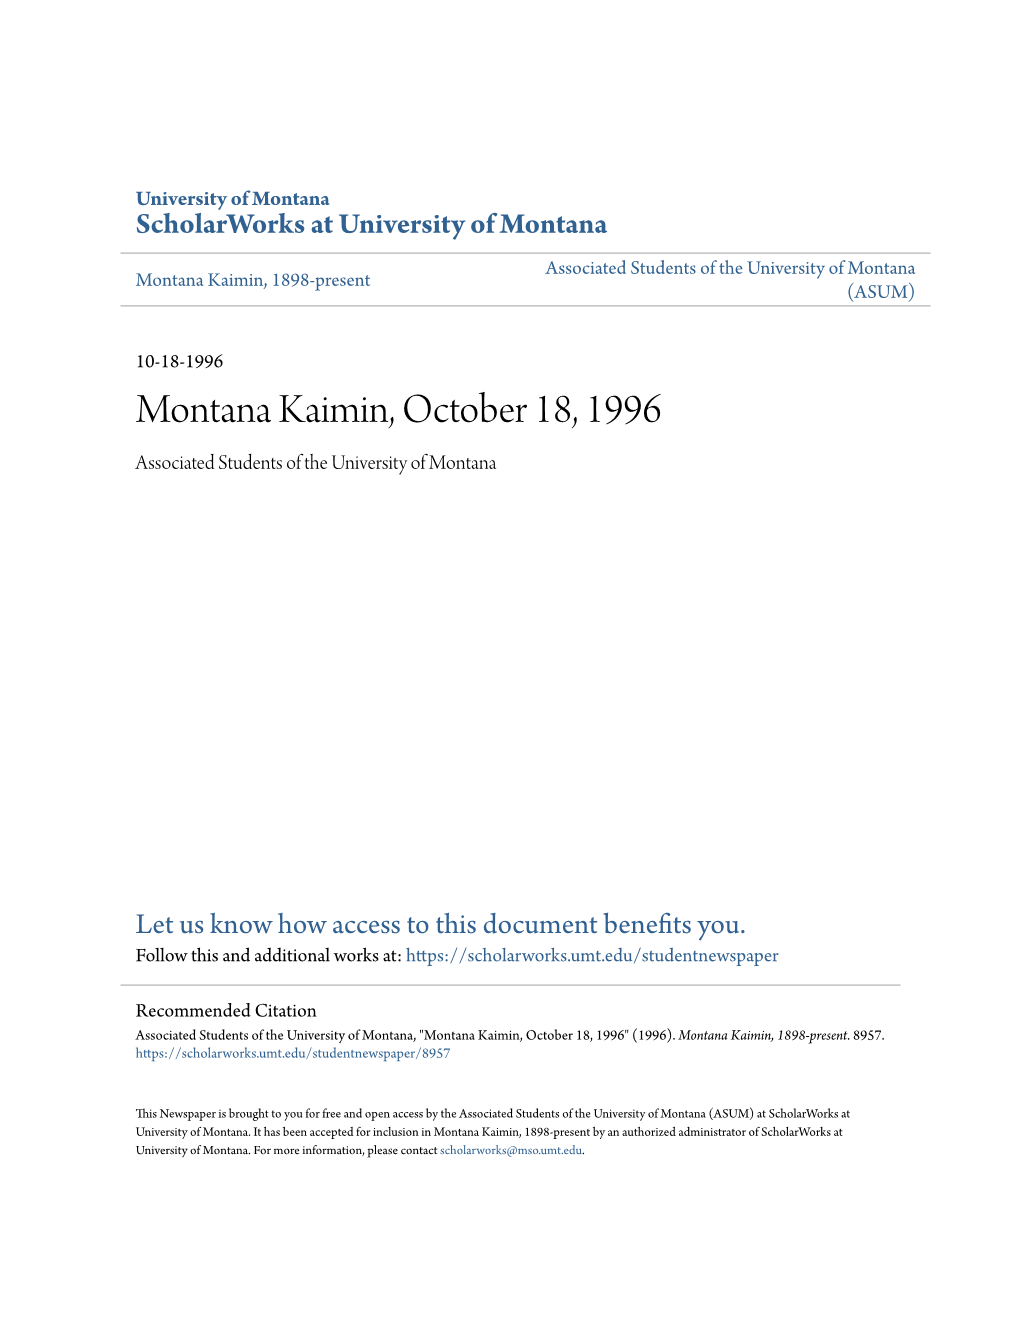 Montana Kaimin, October 18, 1996 Associated Students of the University of Montana